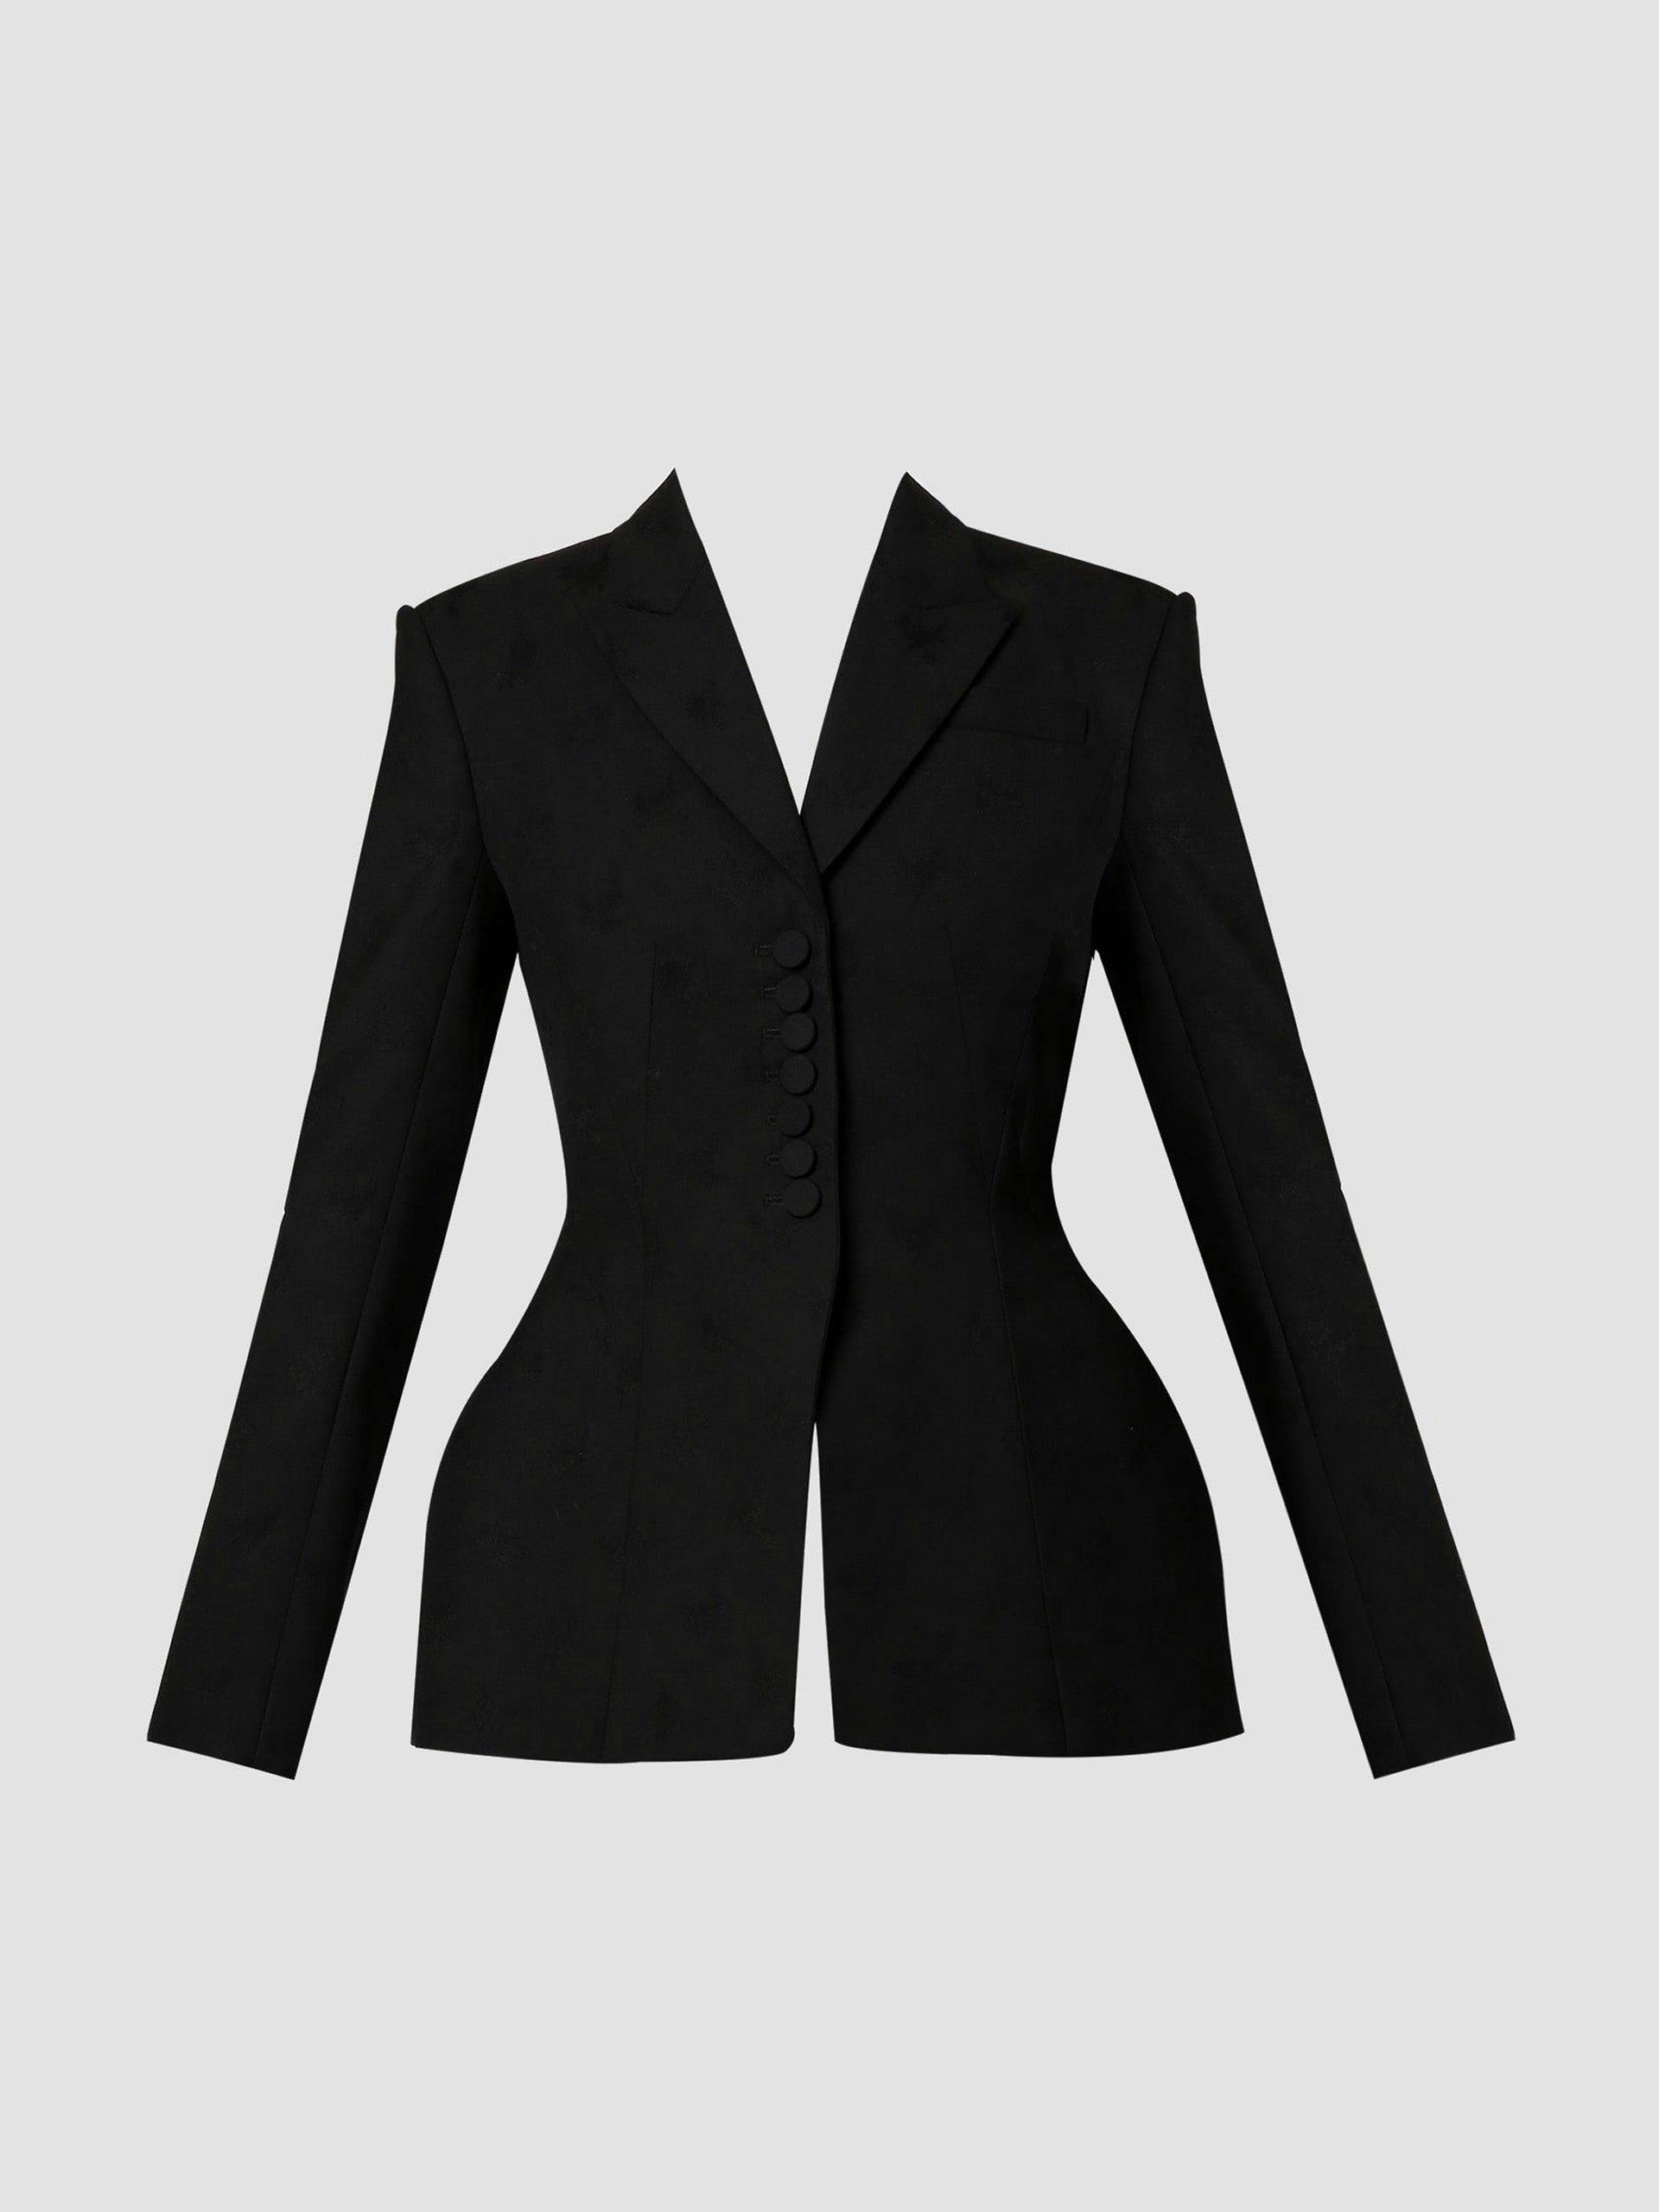 Single breasted black jacket